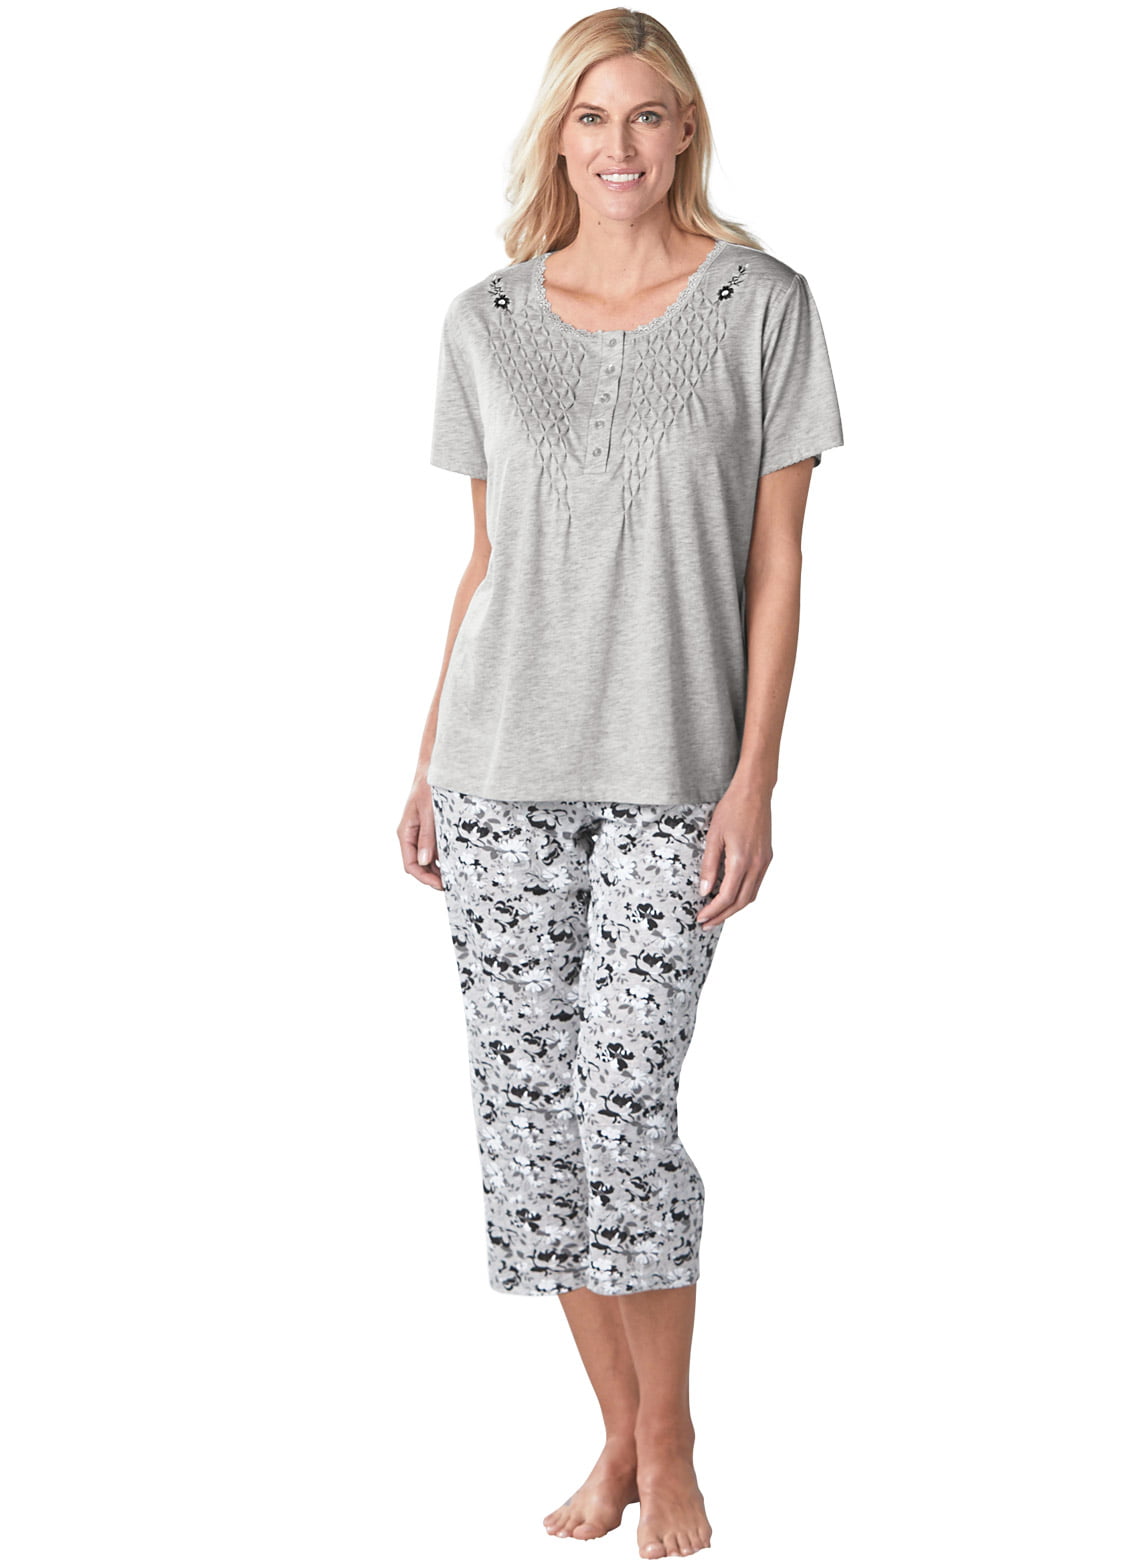 Pajama Set for Women with Capris - Short Sleeve Sleepwear Pjs Sets ...